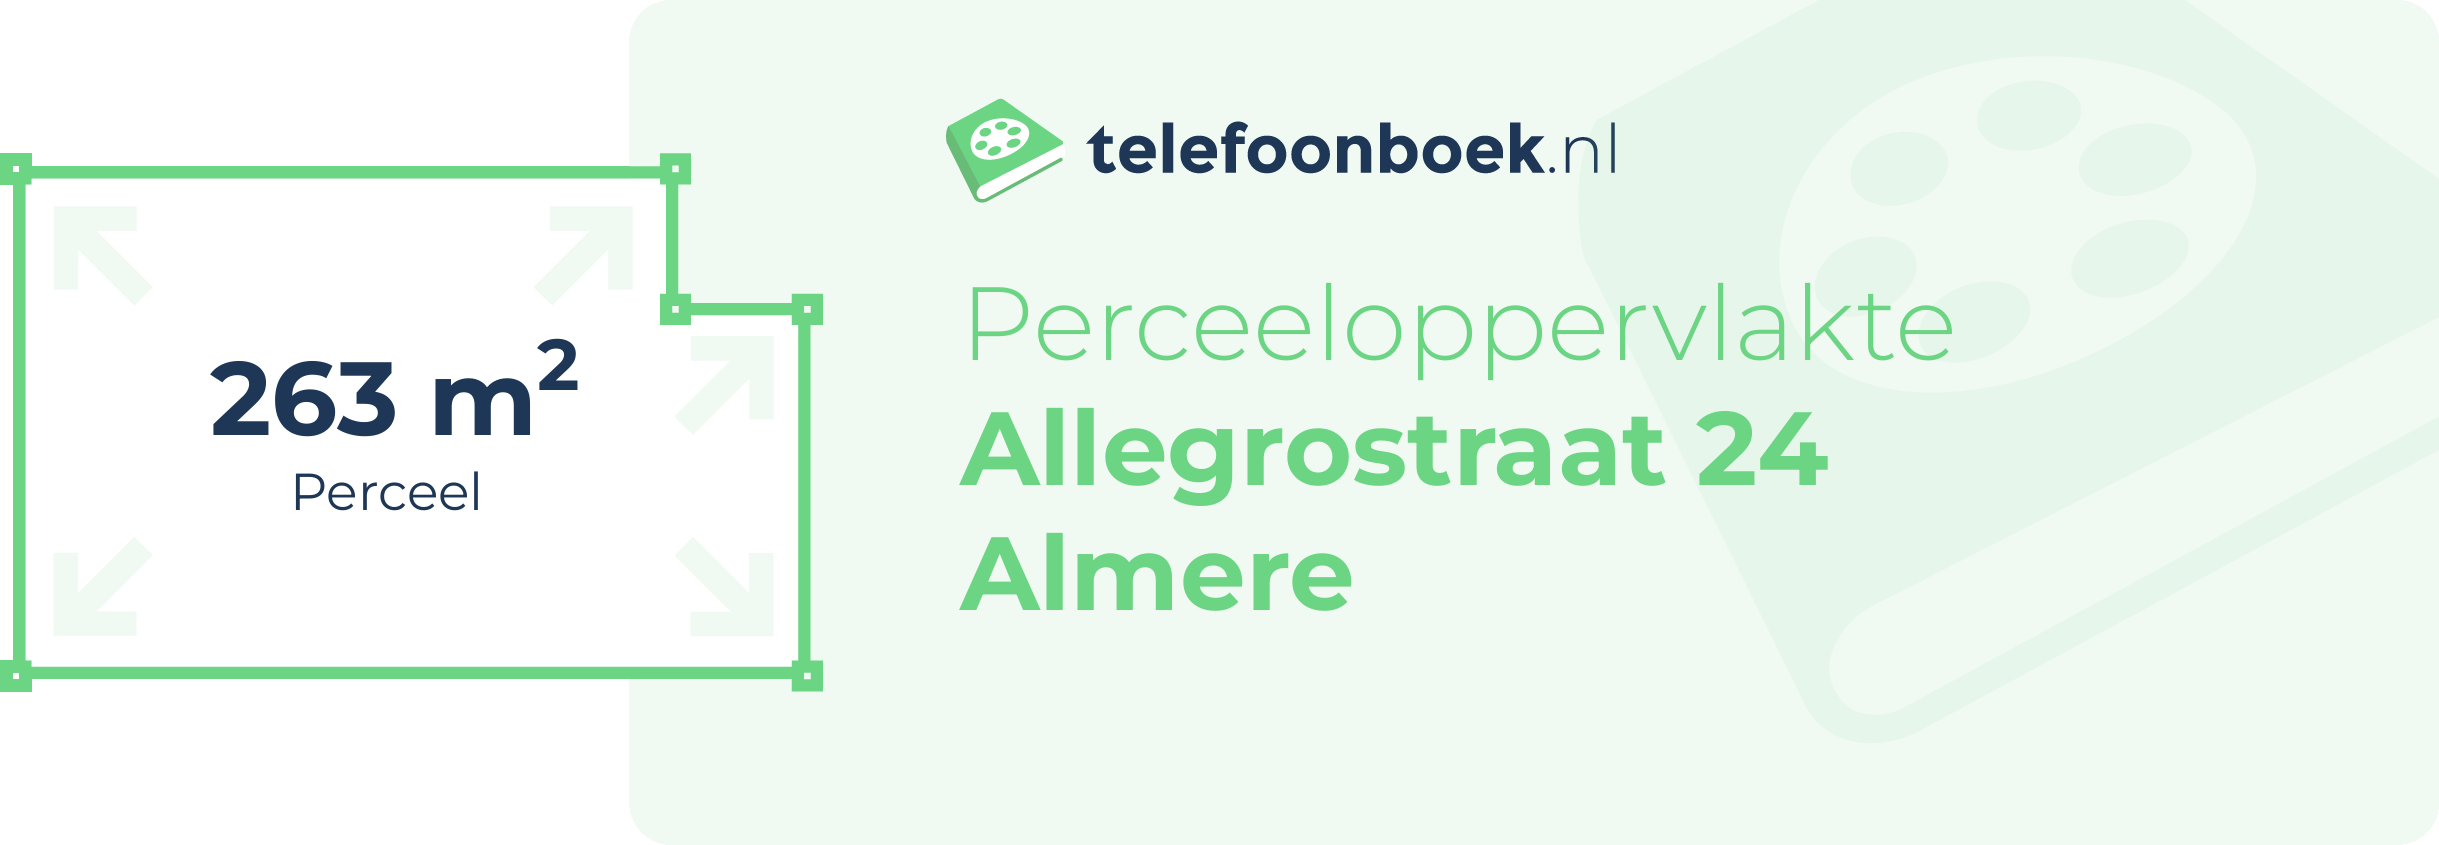 Perceeloppervlakte Allegrostraat 24 Almere